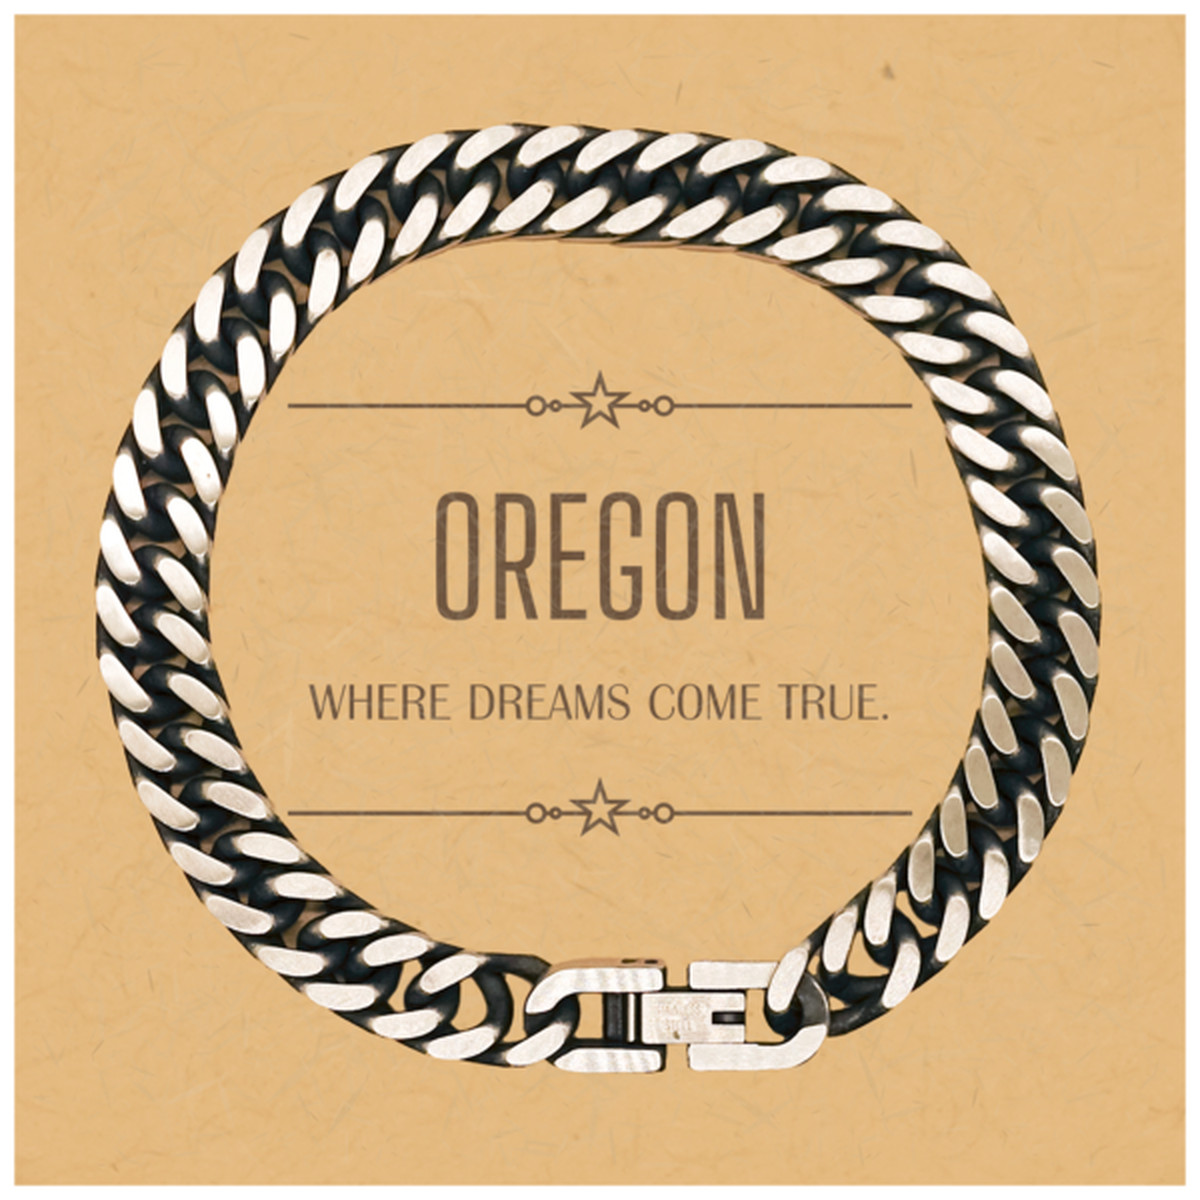 Love Oregon State Cuban Link Chain Bracelet, Oregon Where dreams come true, Birthday Christmas Inspirational Gifts For Oregon Men, Women, Friends